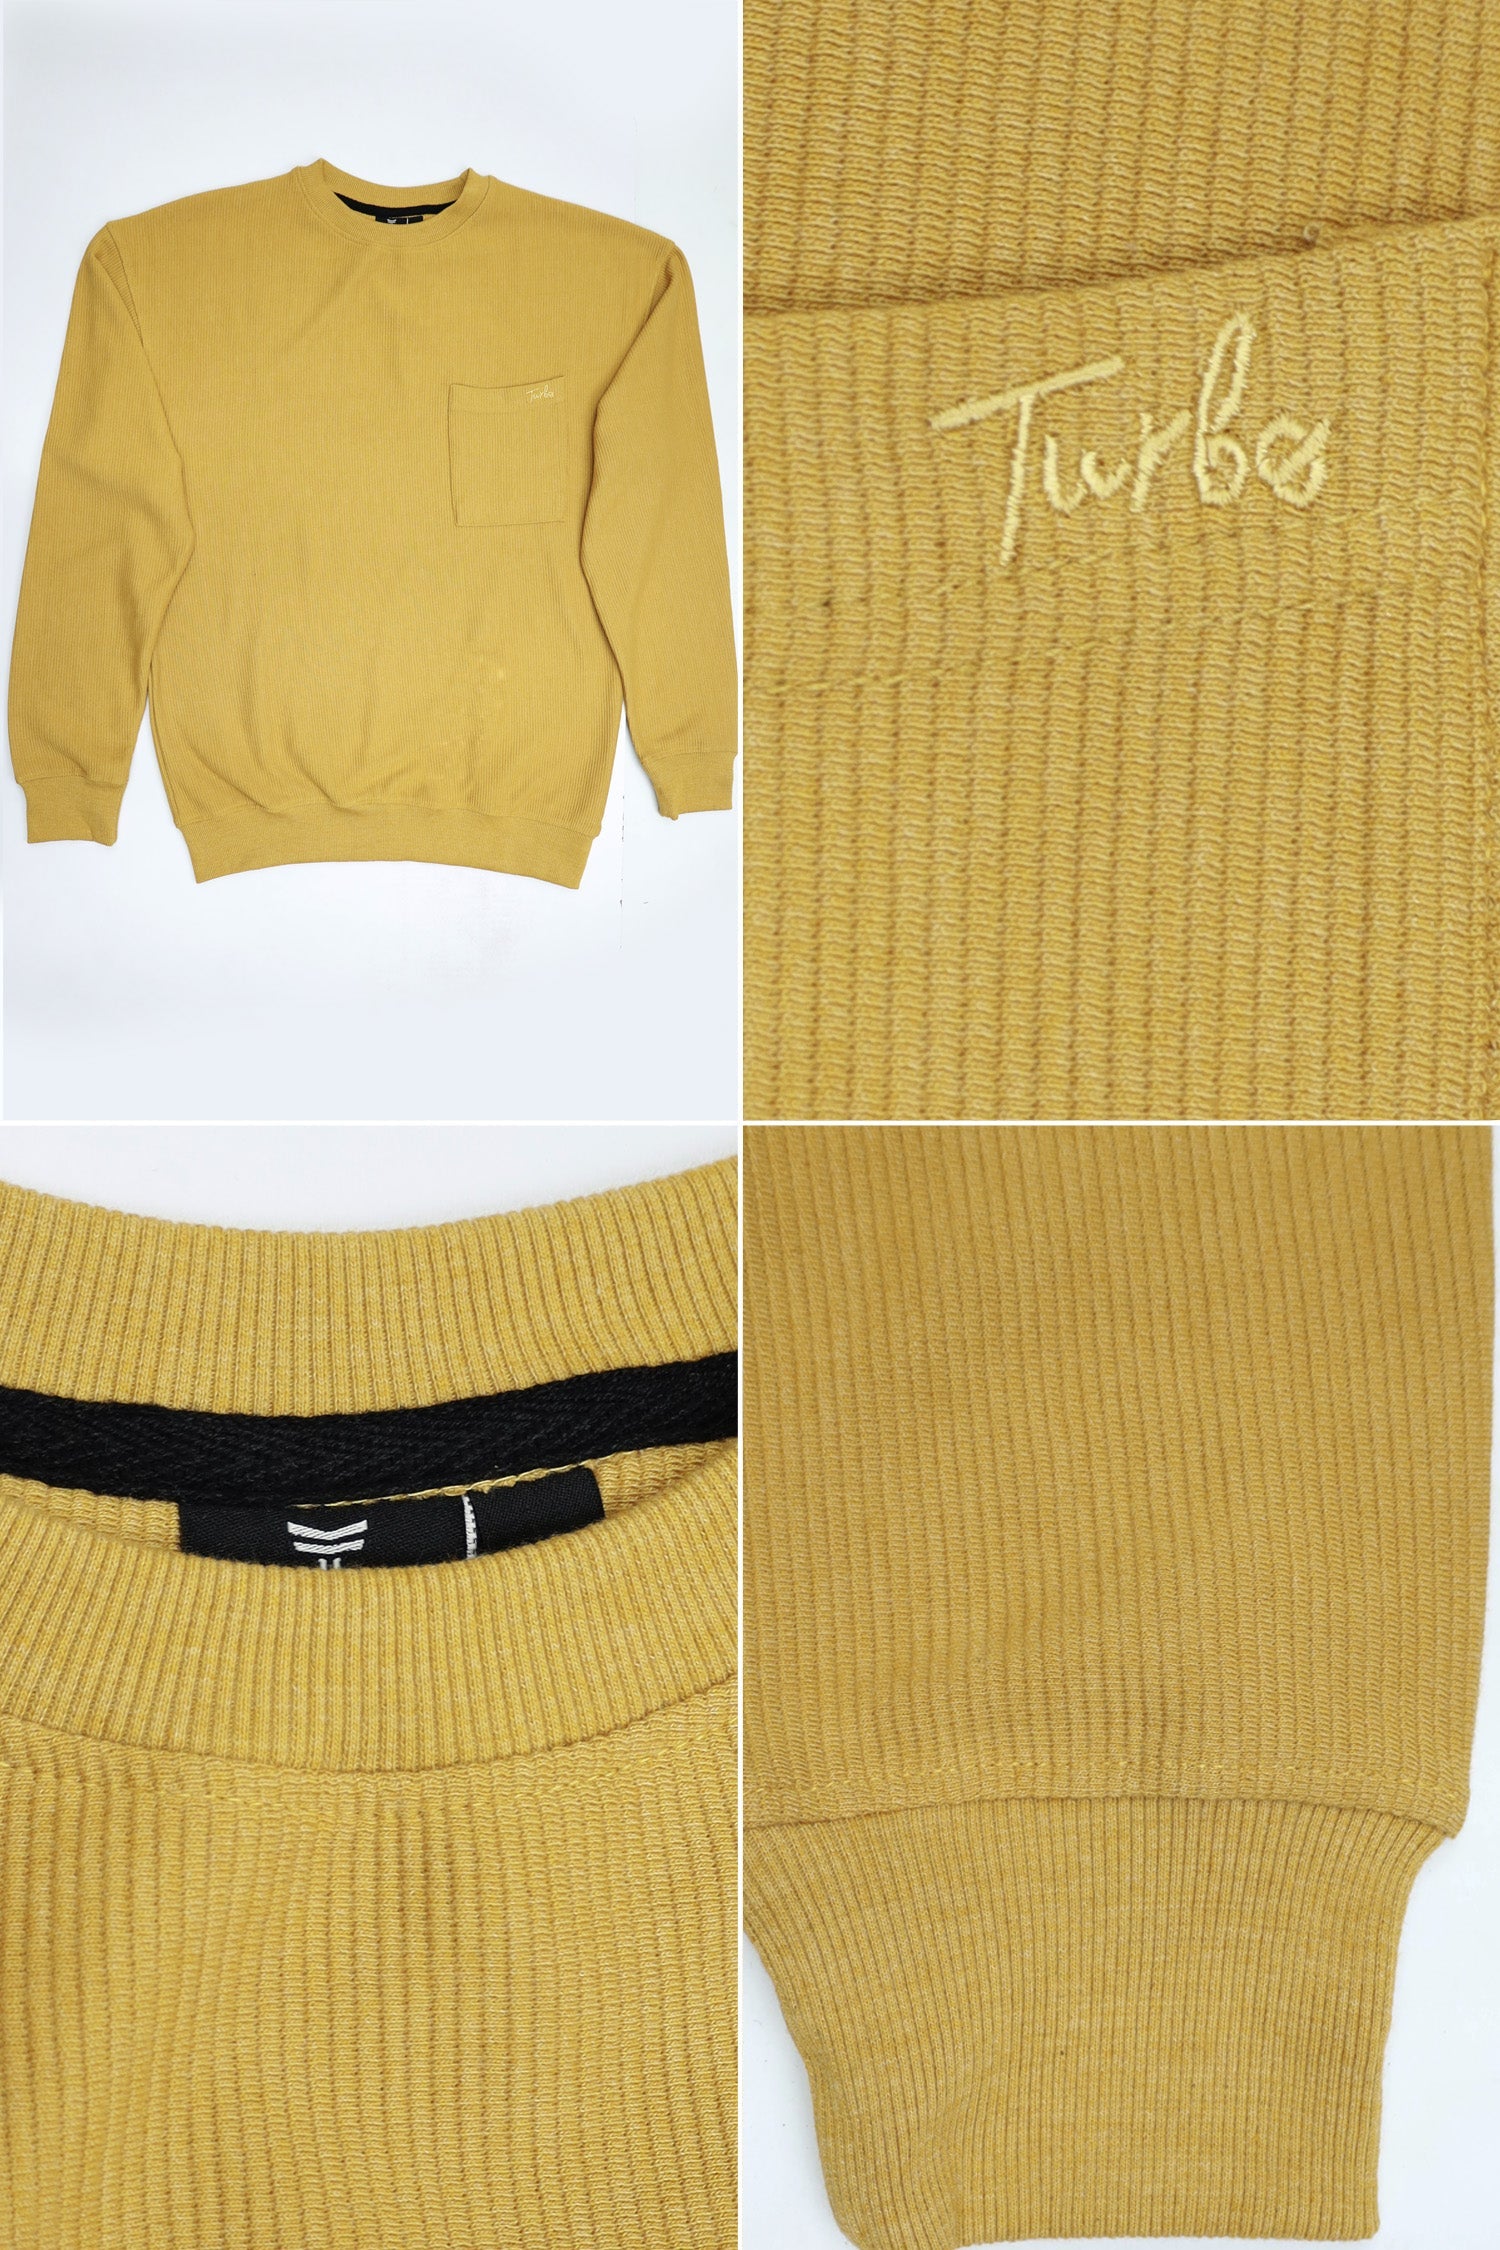 Turbo Pocket Style Embroided Men's Sweatshirt In Light Yellow